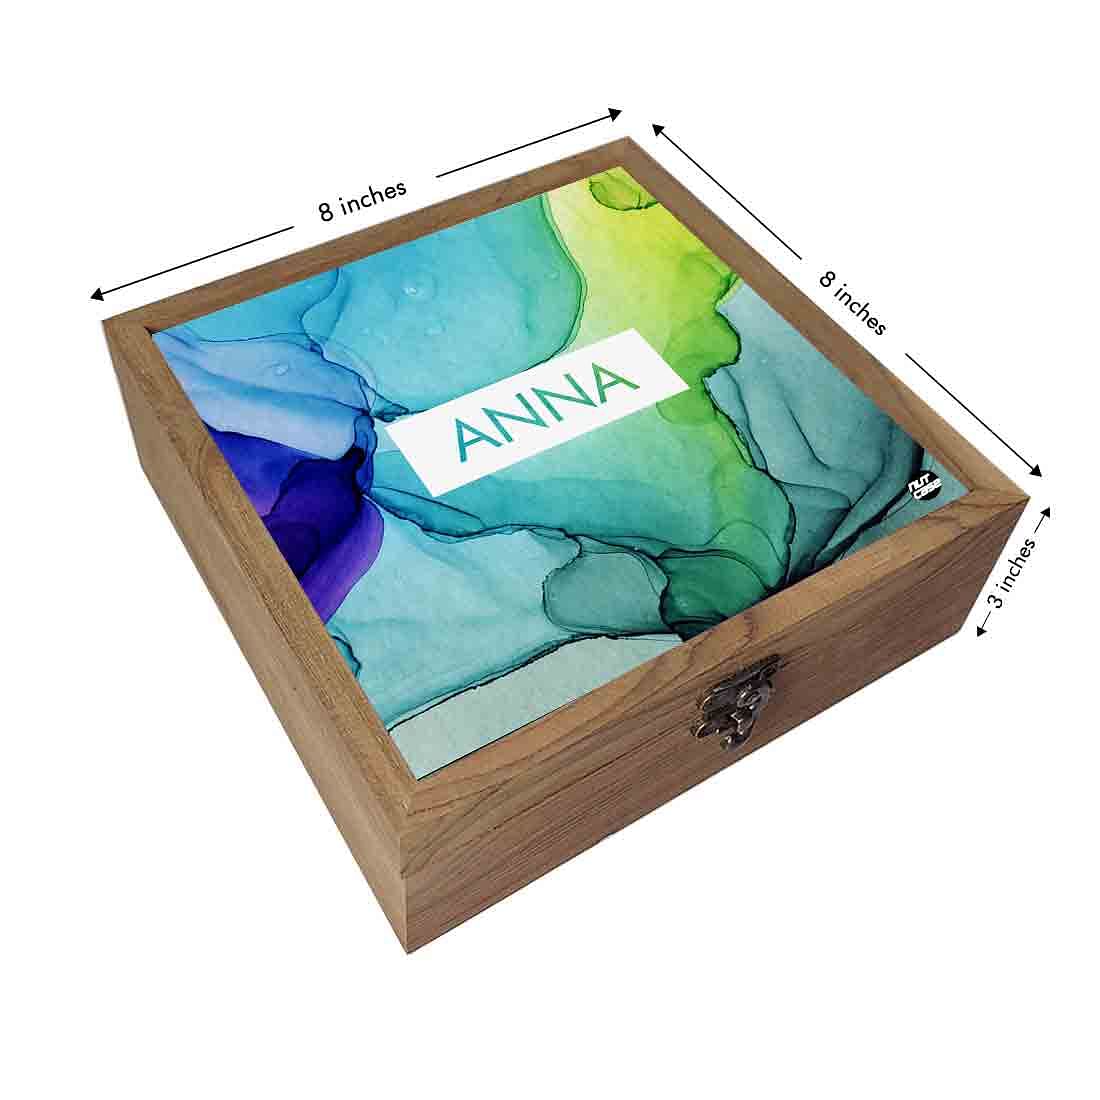 Customized Jewellery Storage Box for Girls - Watercolor Nutcase